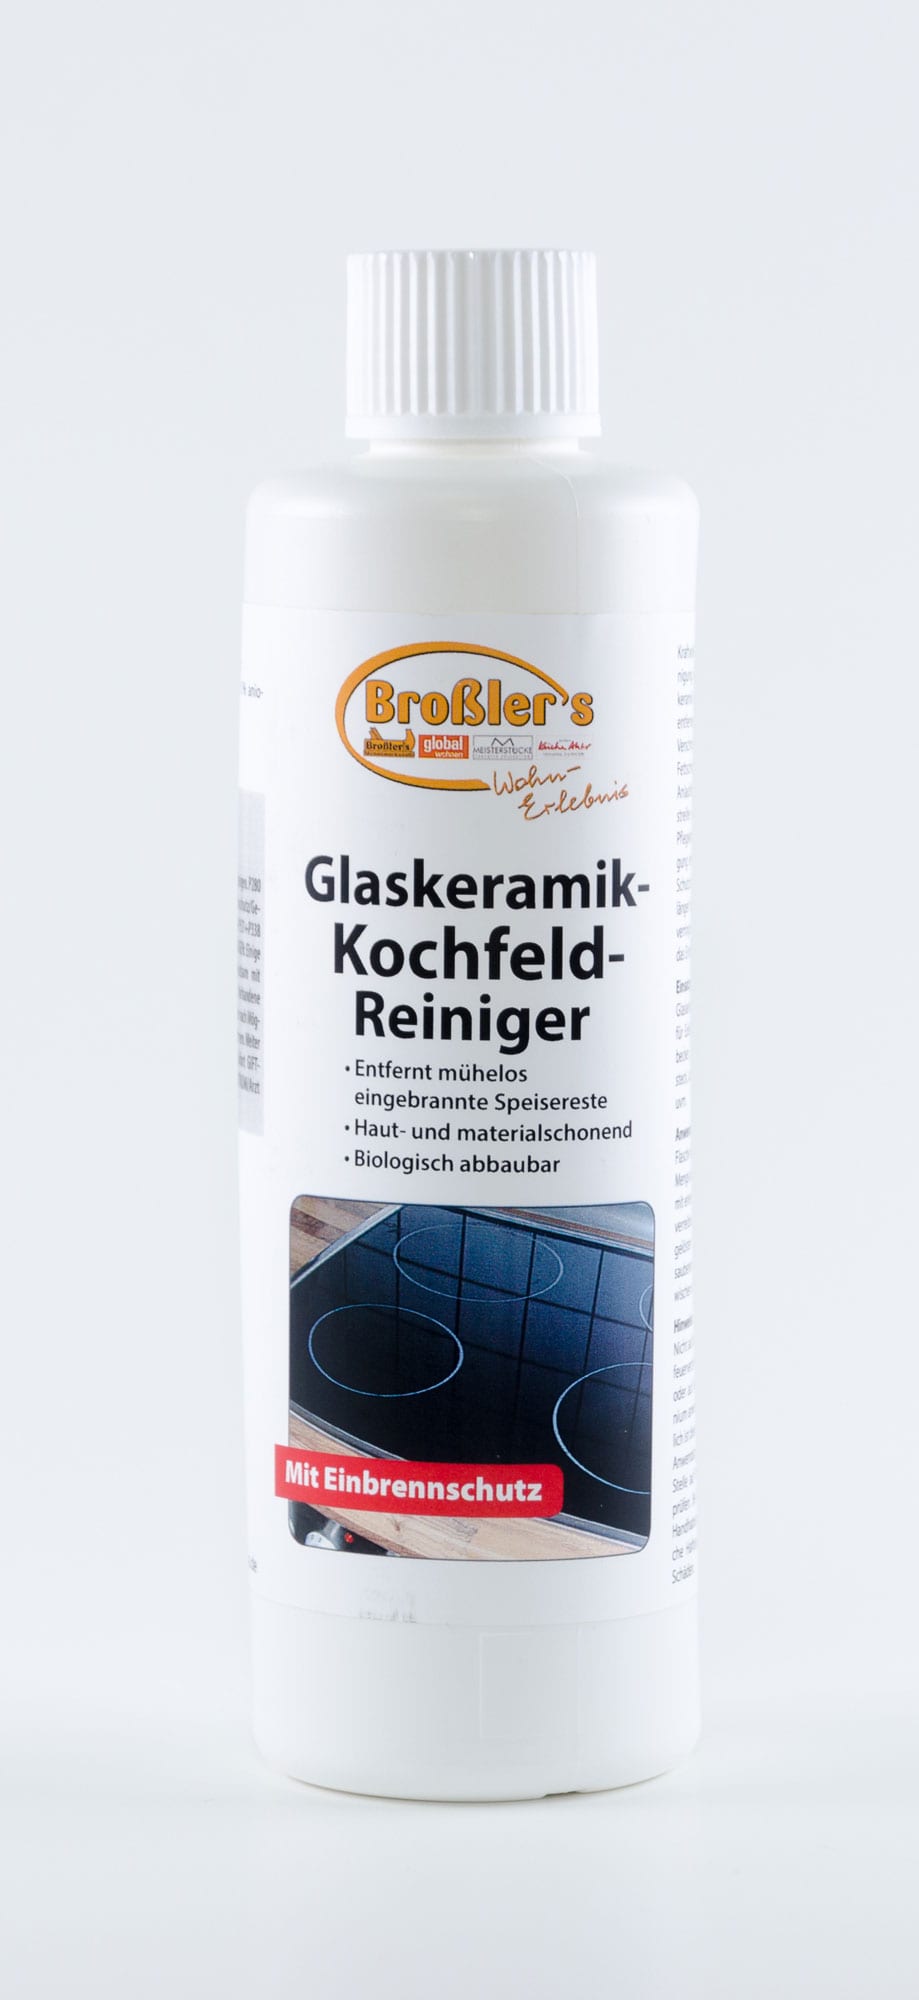 Glaskeramik-Kochfeld-Reiniger